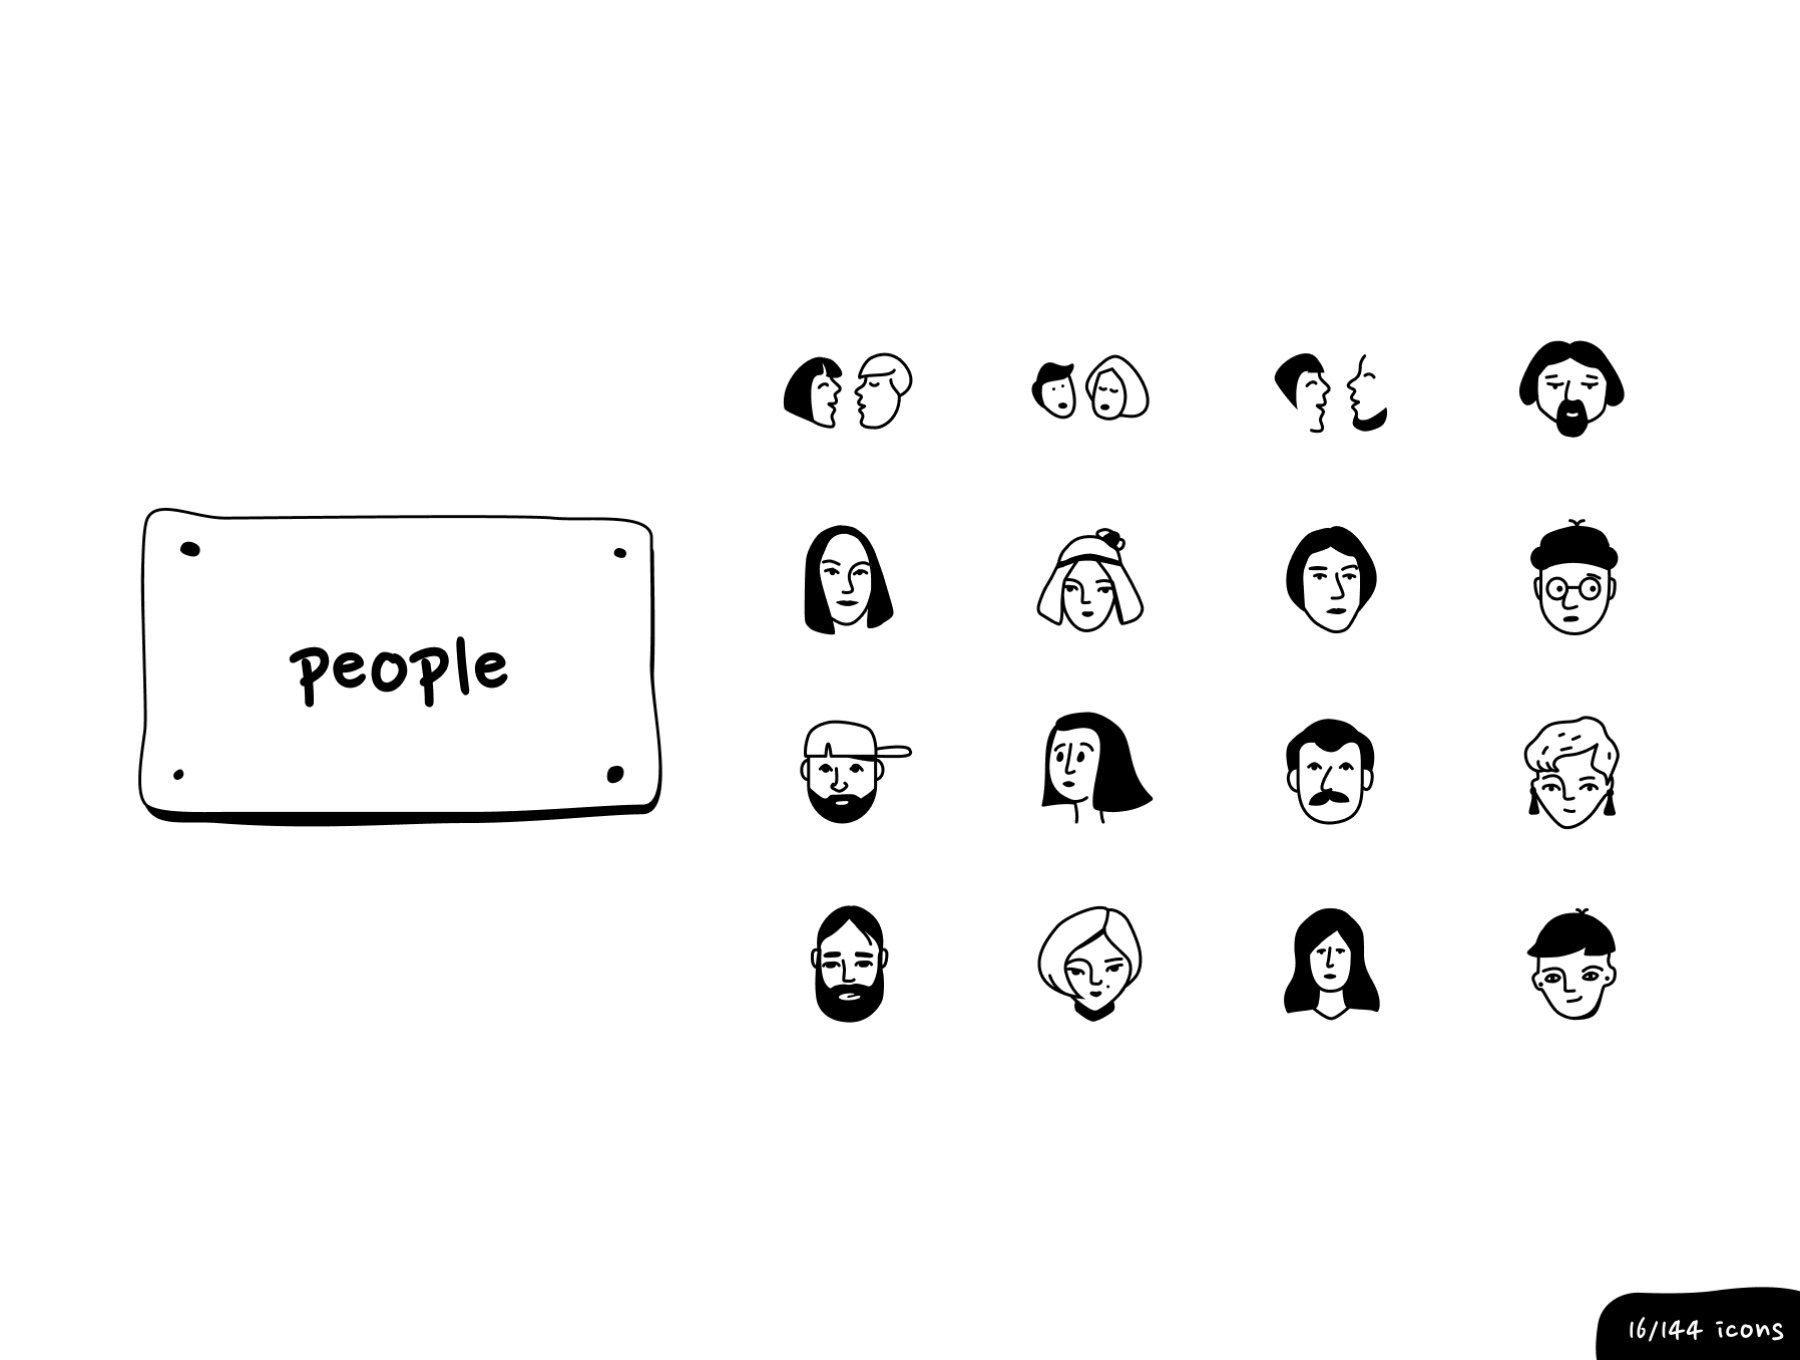 People - 墨水图标套装 People - Inking Icon Set sketch, figma格式-3D/图标-到位啦UI